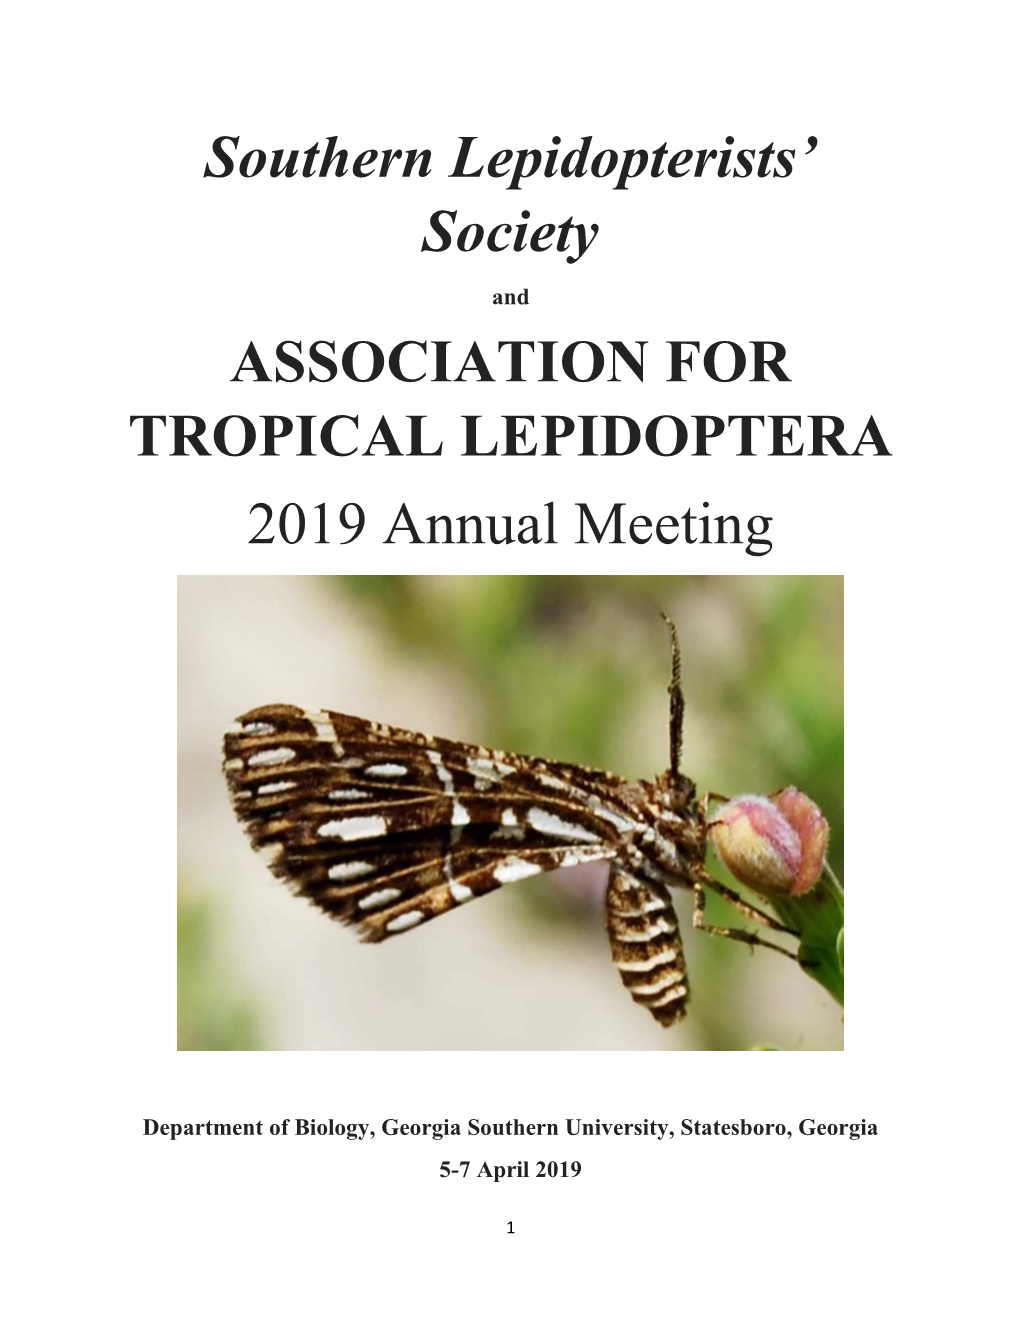 Southern Lepidopterists' Society